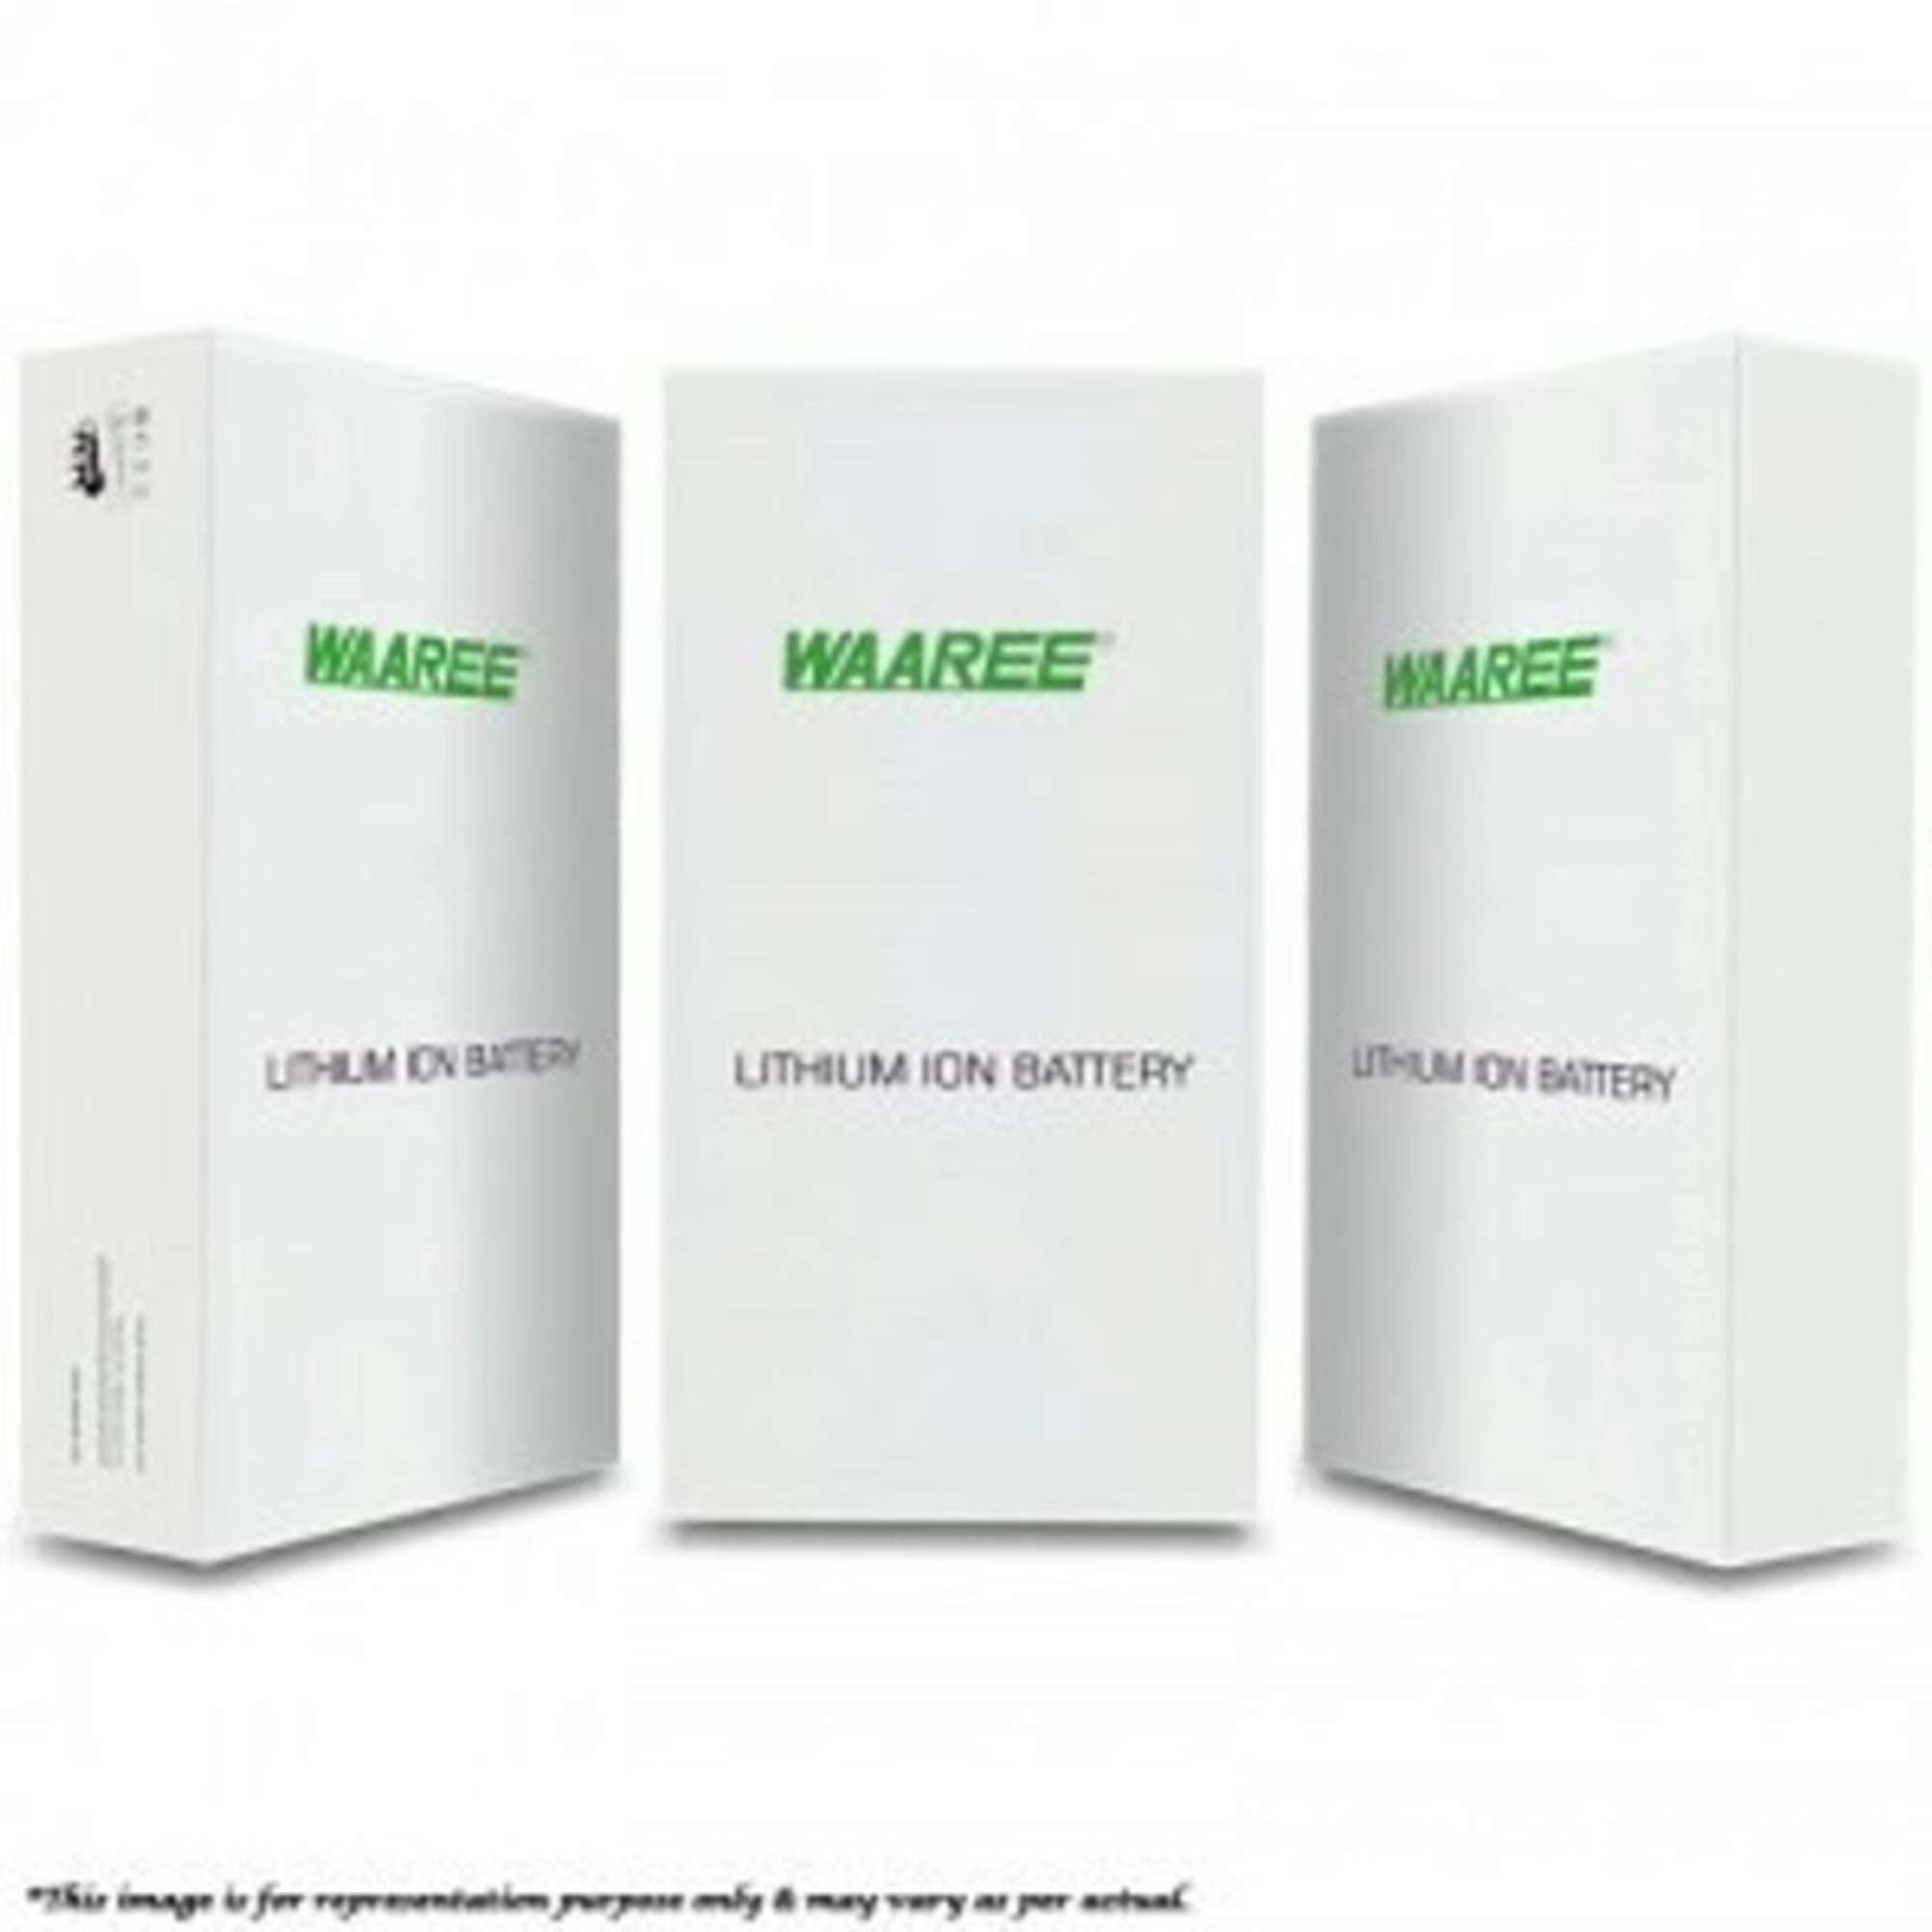 Waaree 48V/200 Ah (9600 Wh) Li-Ion LFP Battery Packs